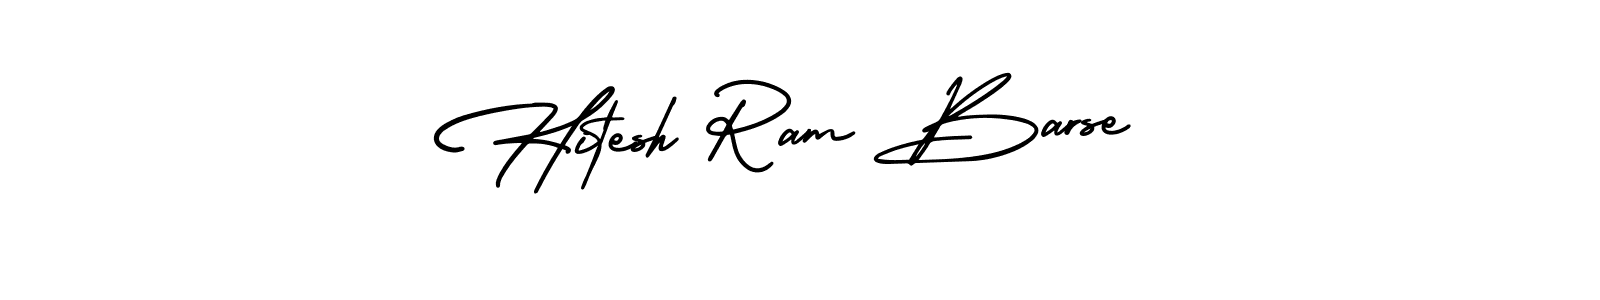 How to Draw Hitesh Ram Barse signature style? AmerikaSignatureDemo-Regular is a latest design signature styles for name Hitesh Ram Barse. Hitesh Ram Barse signature style 3 images and pictures png